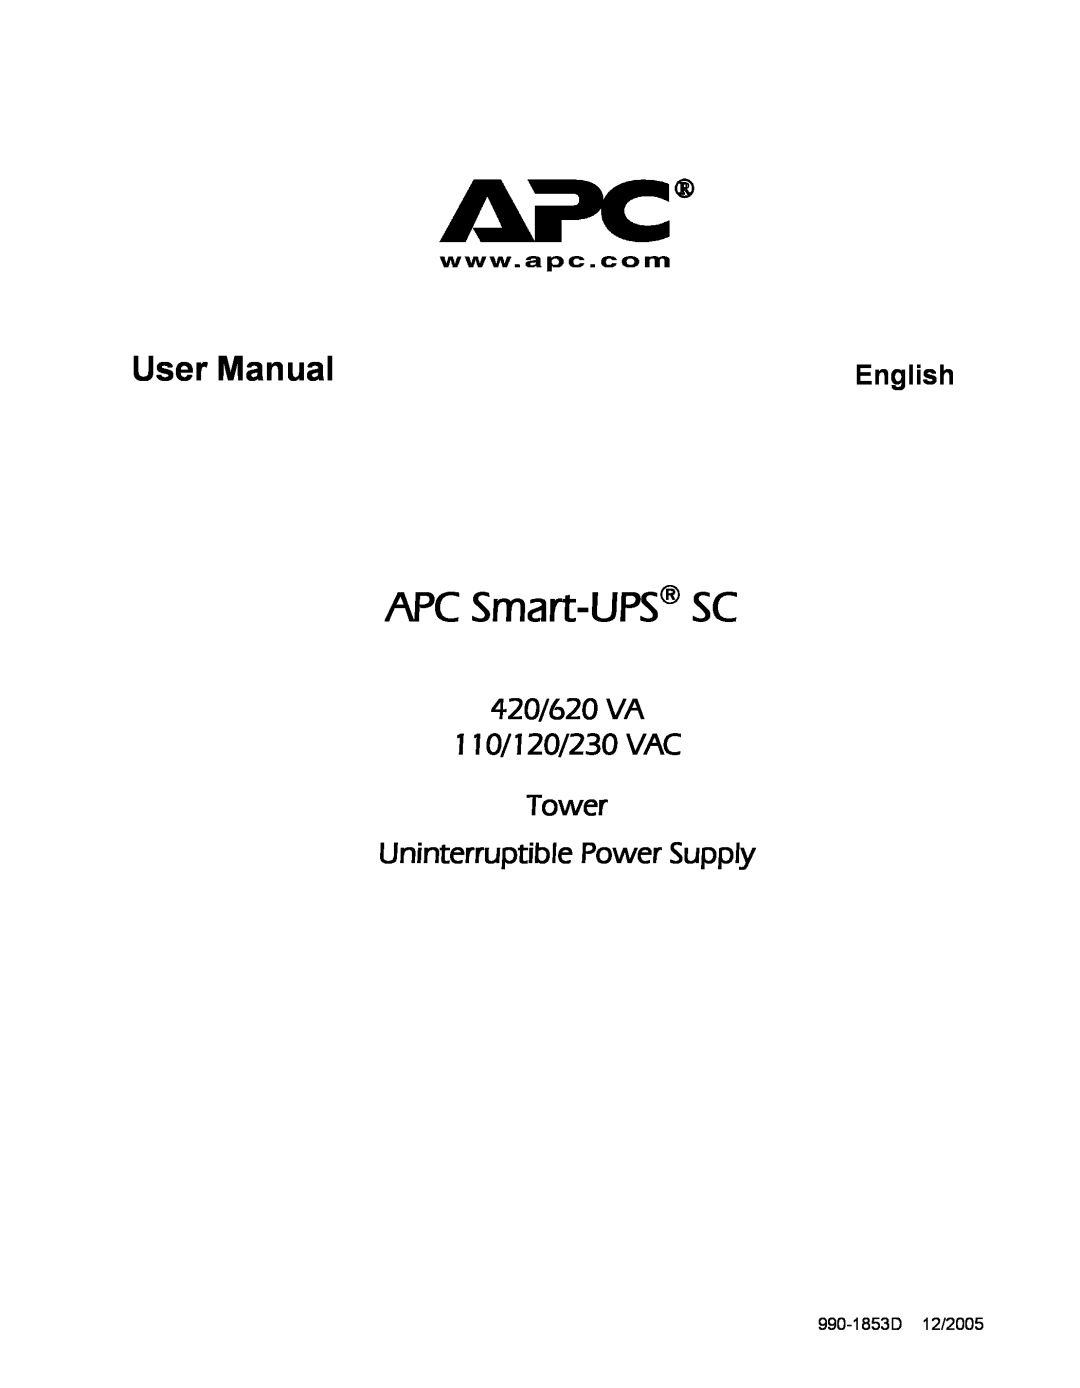 APC user manual APC Smart-UPS SC, User Manual, 420/620 VA 110/120/230 VAC Tower Uninterruptible Power Supply, English 